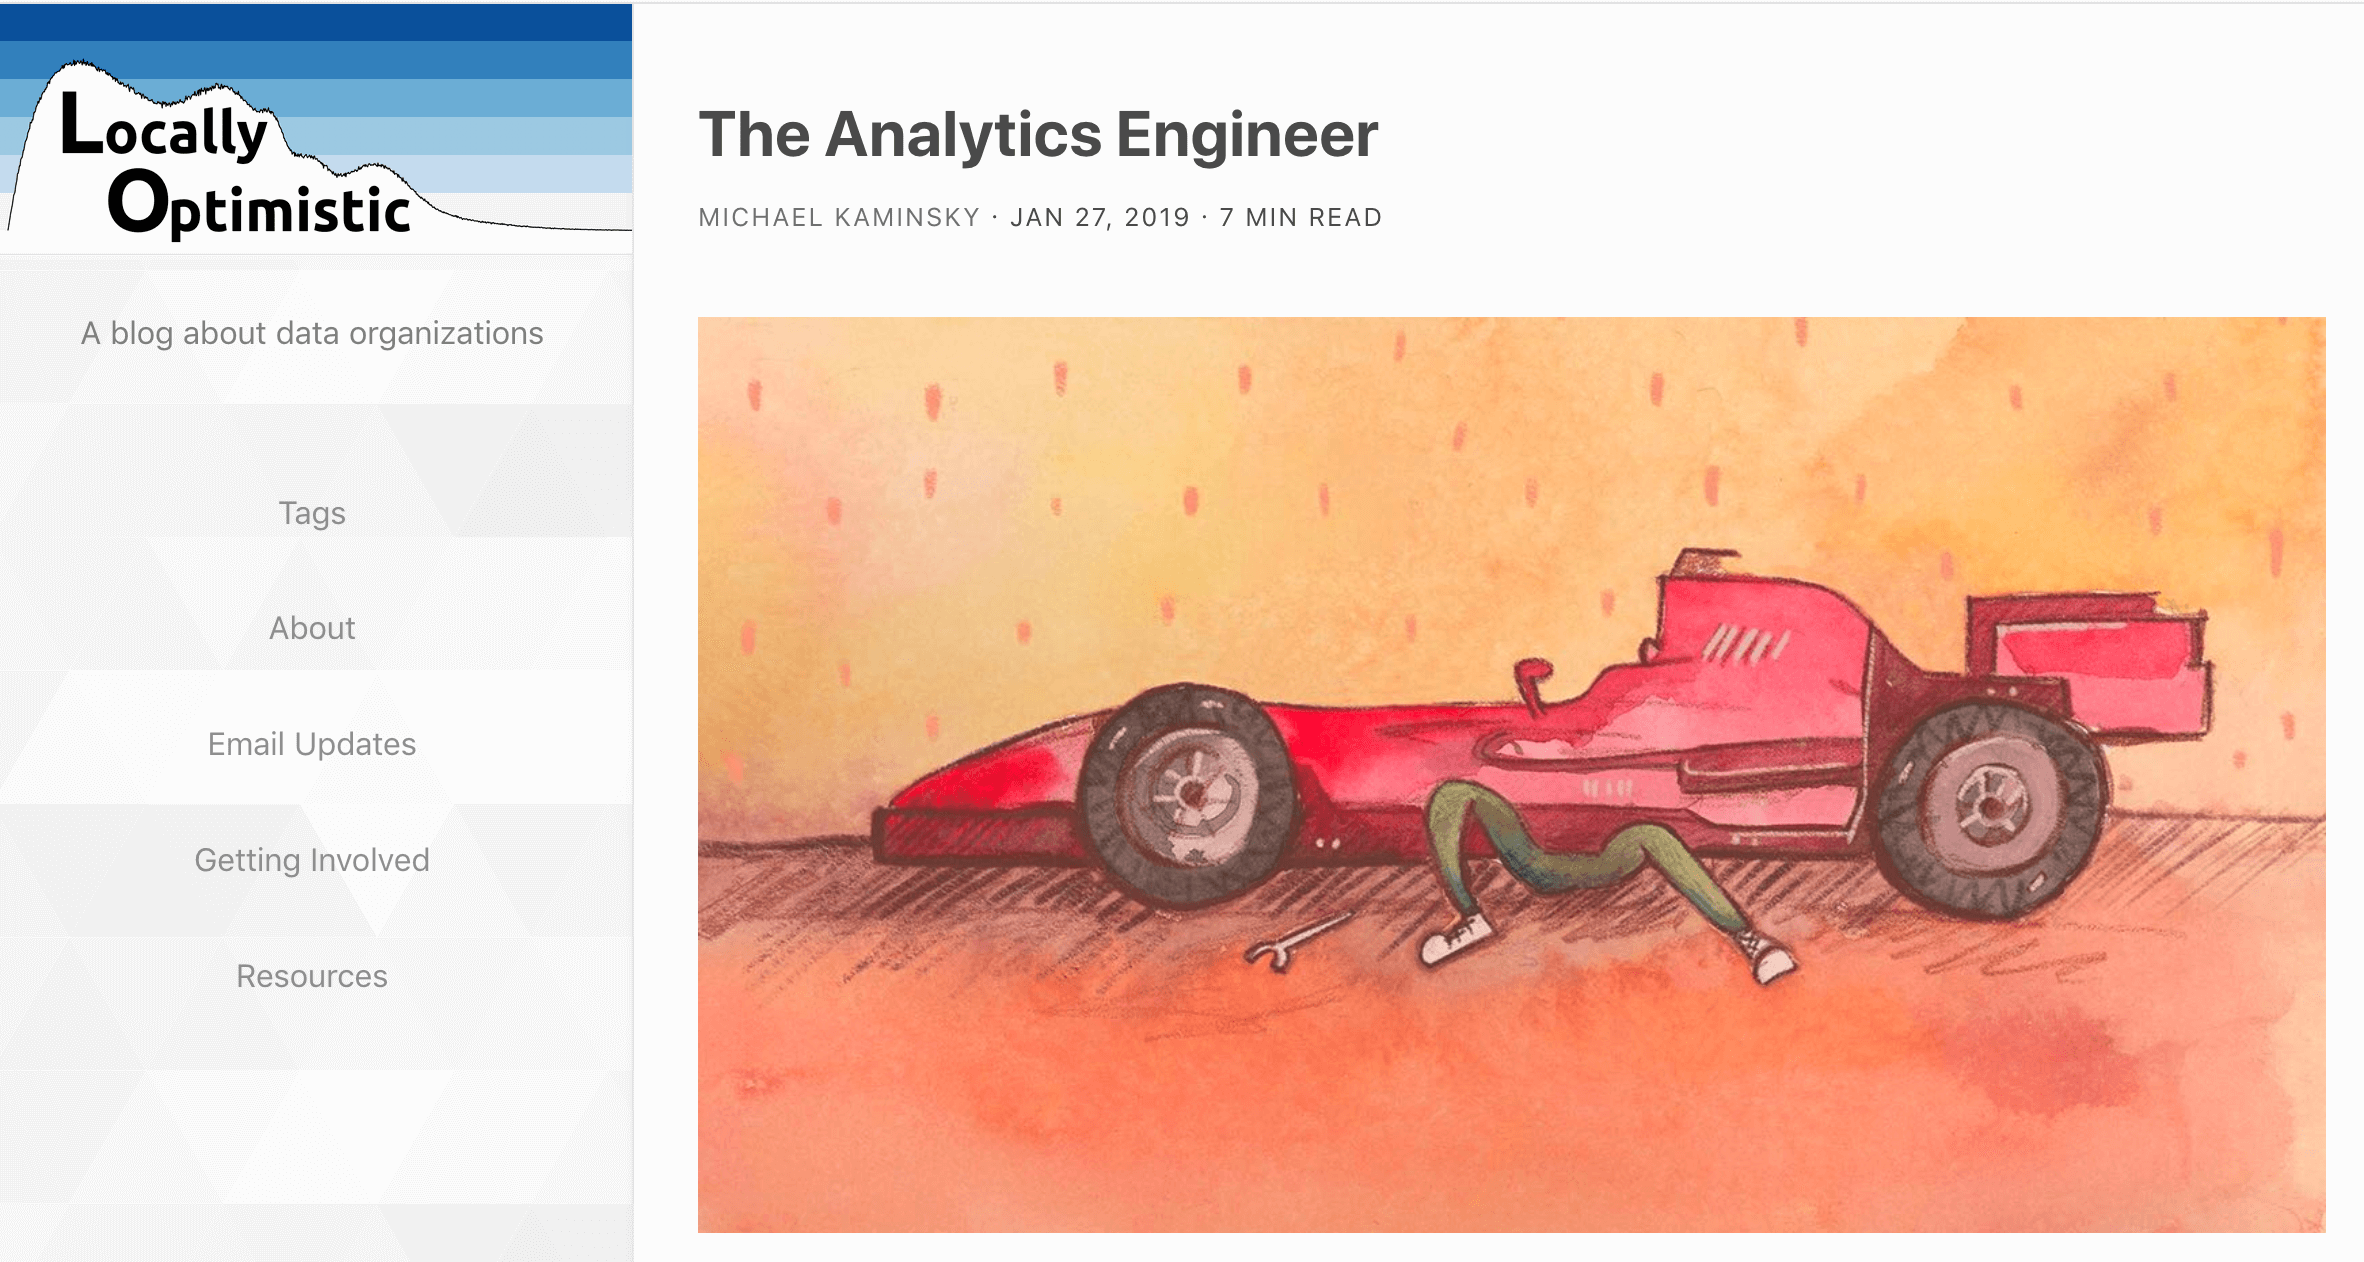 The Analytics Engineer post